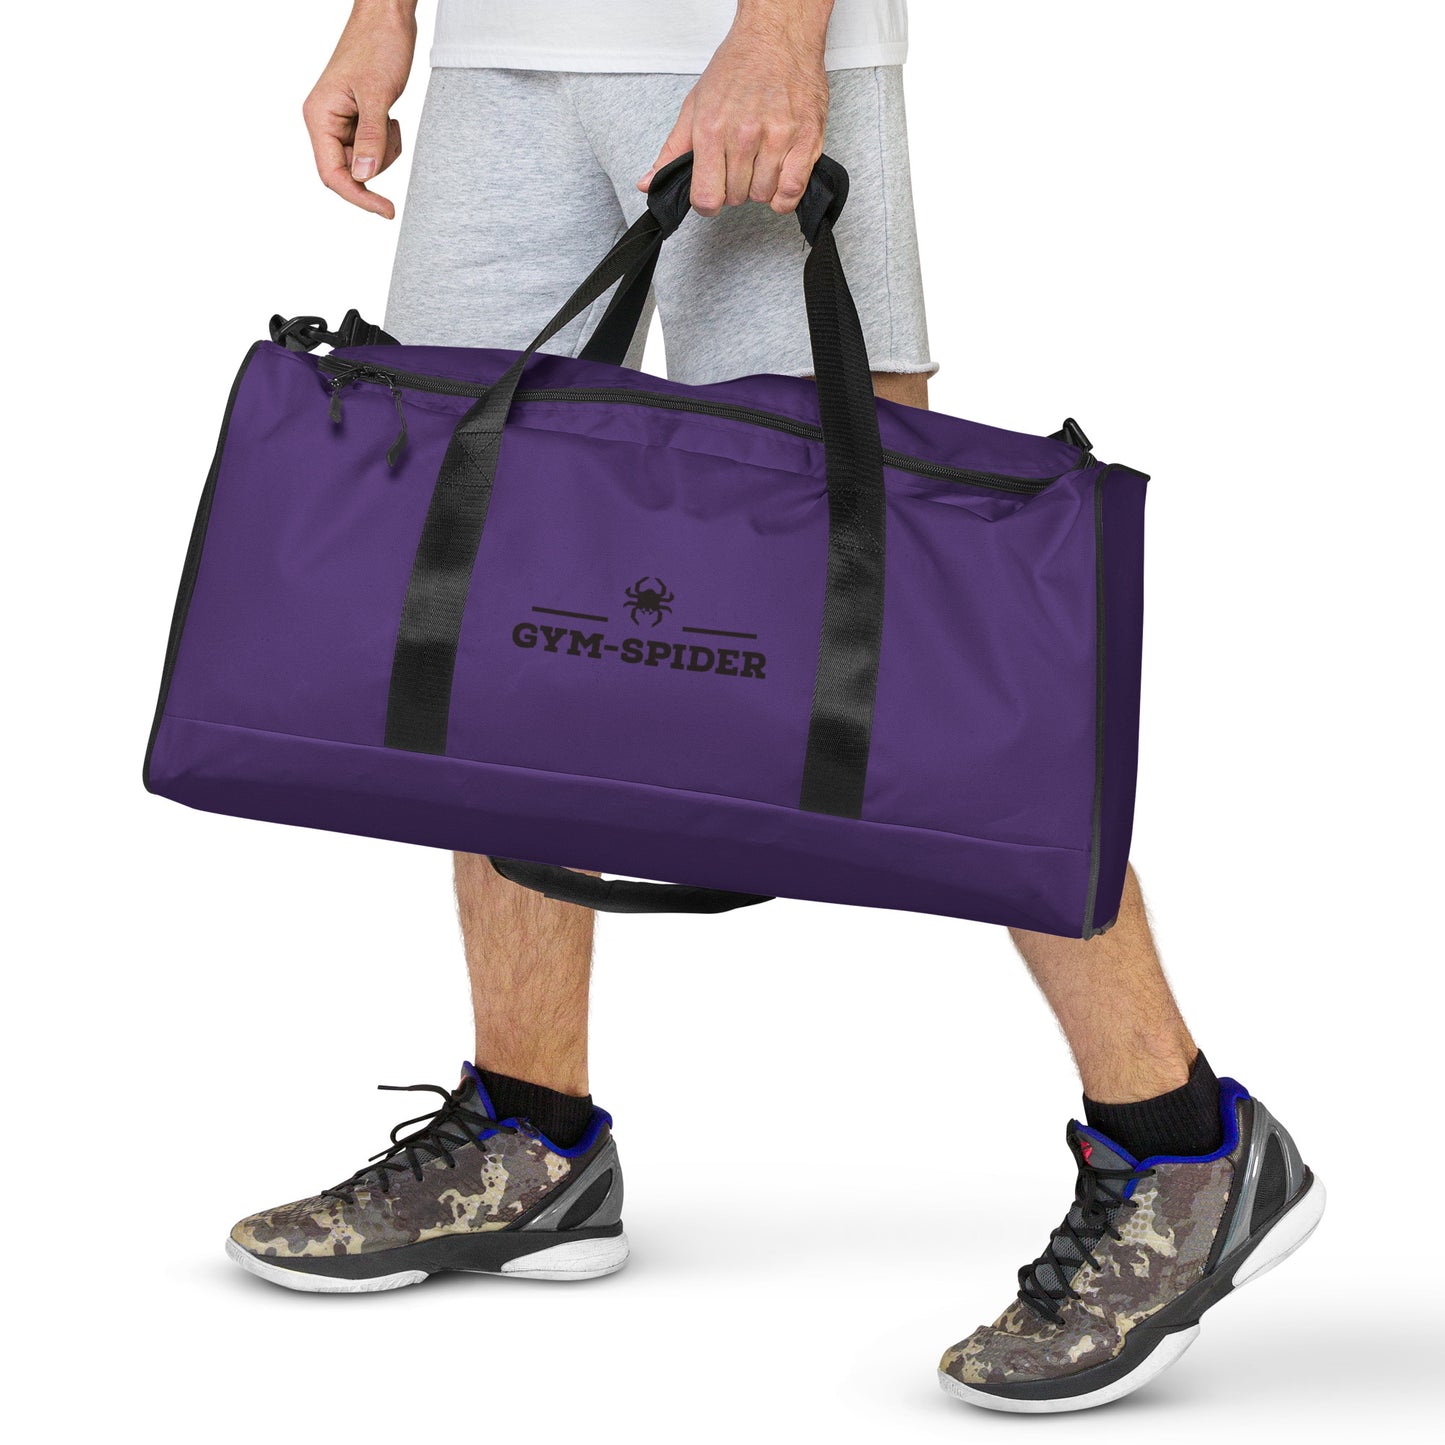 Gym-Spider Duffle Bag